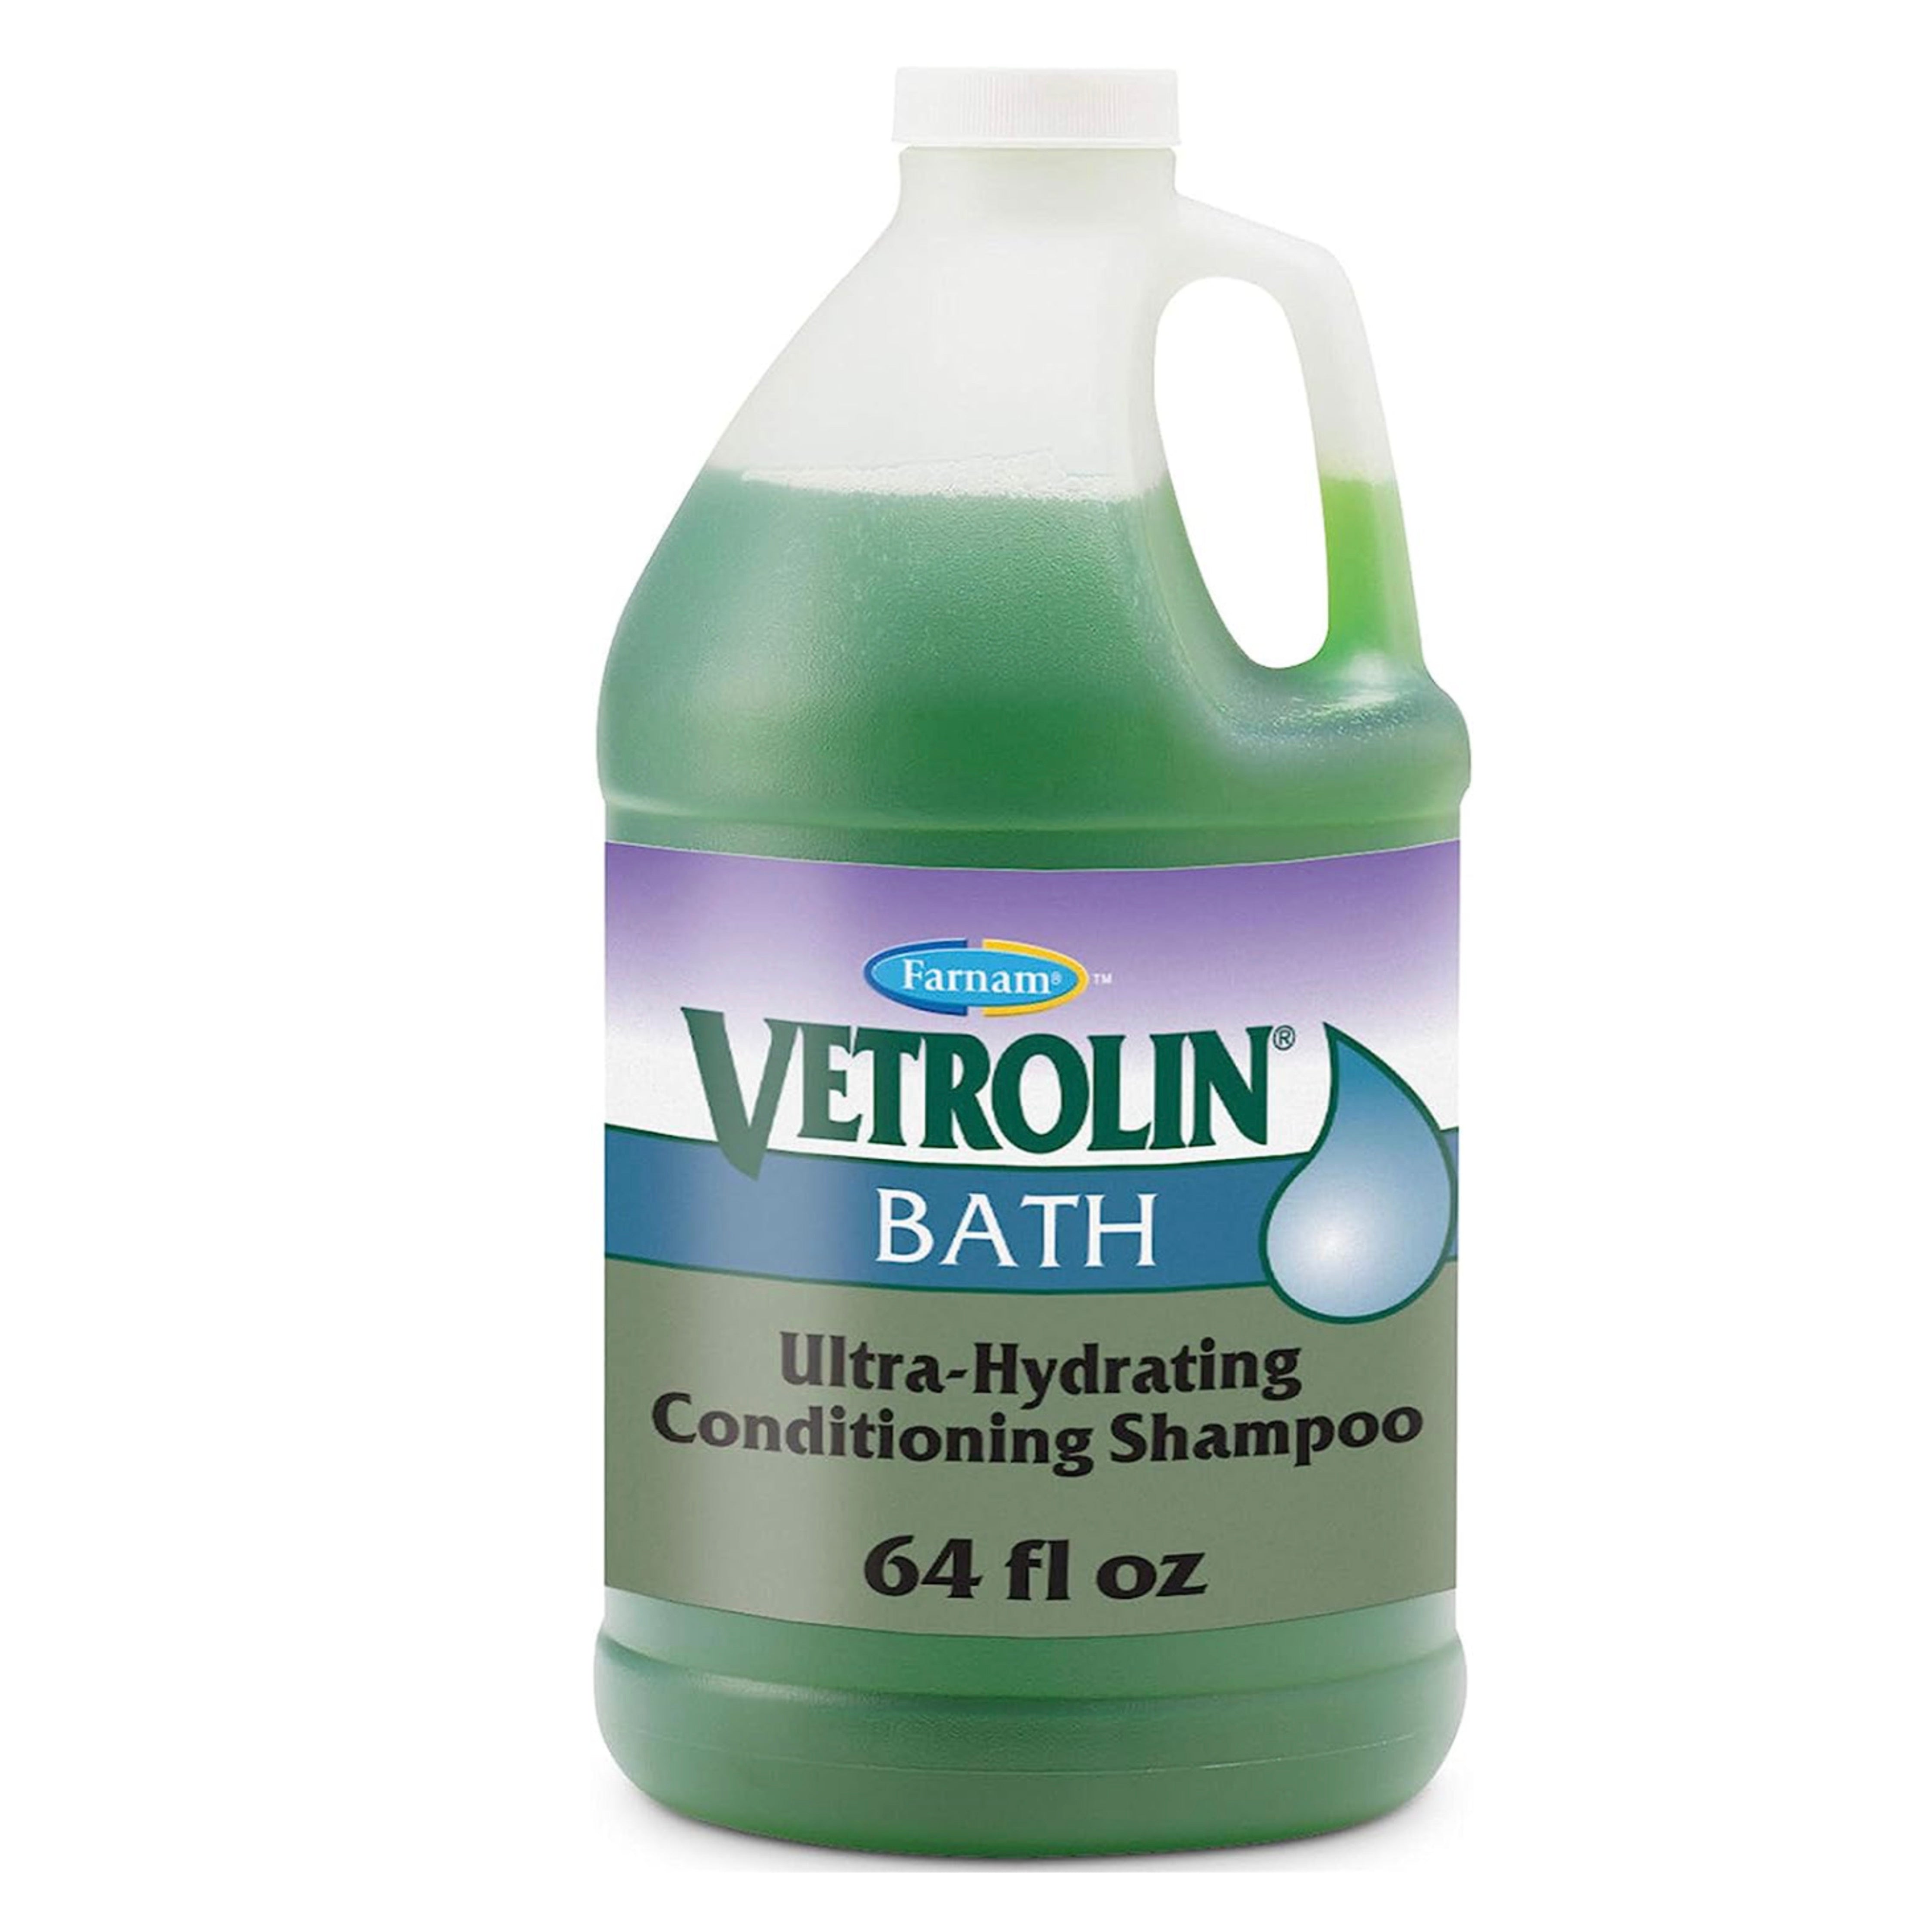 Vetrolin Bath Shampoo 64 oz